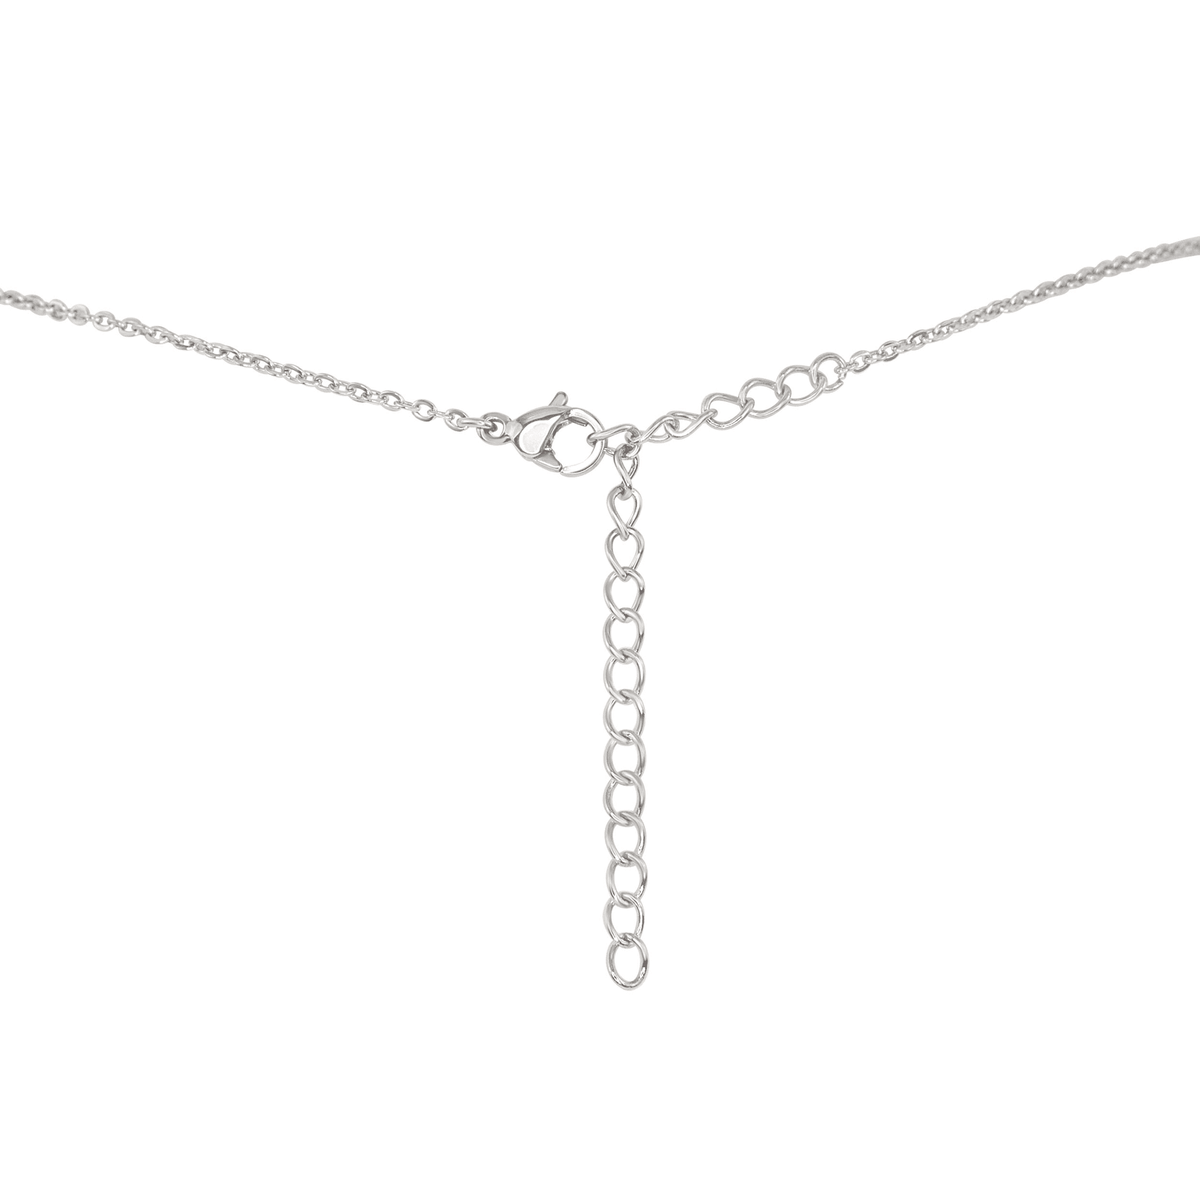 Crystal Quartz Chip Bead Bar Necklace - Crystal Quartz Chip Bead Bar Necklace - Sterling Silver - Luna Tide Handmade Crystal Jewellery